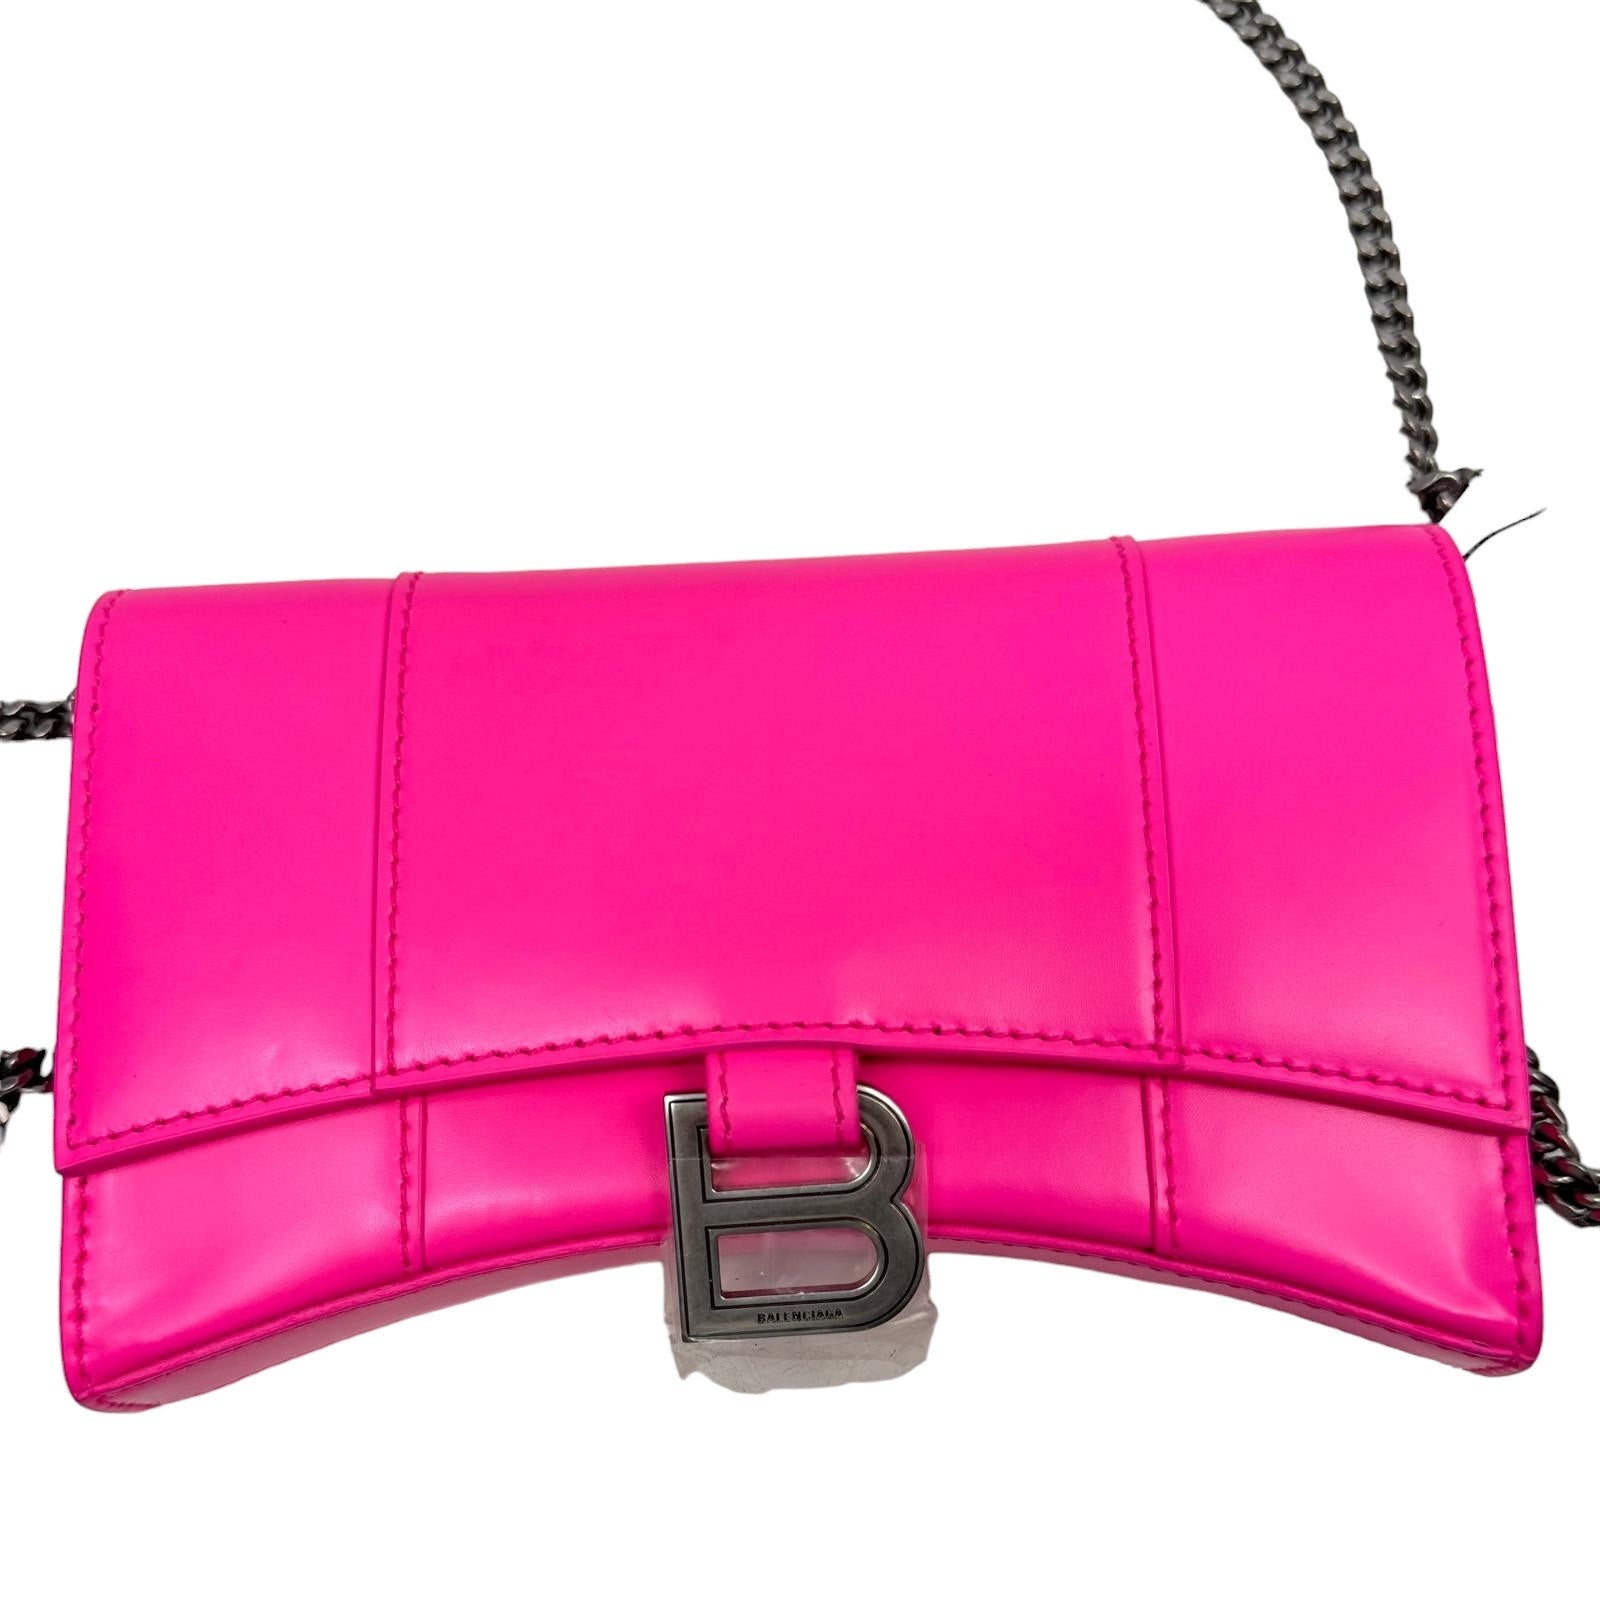 Authentix Balenciaga Shiny Box Hourglass Handbag Hot Pink